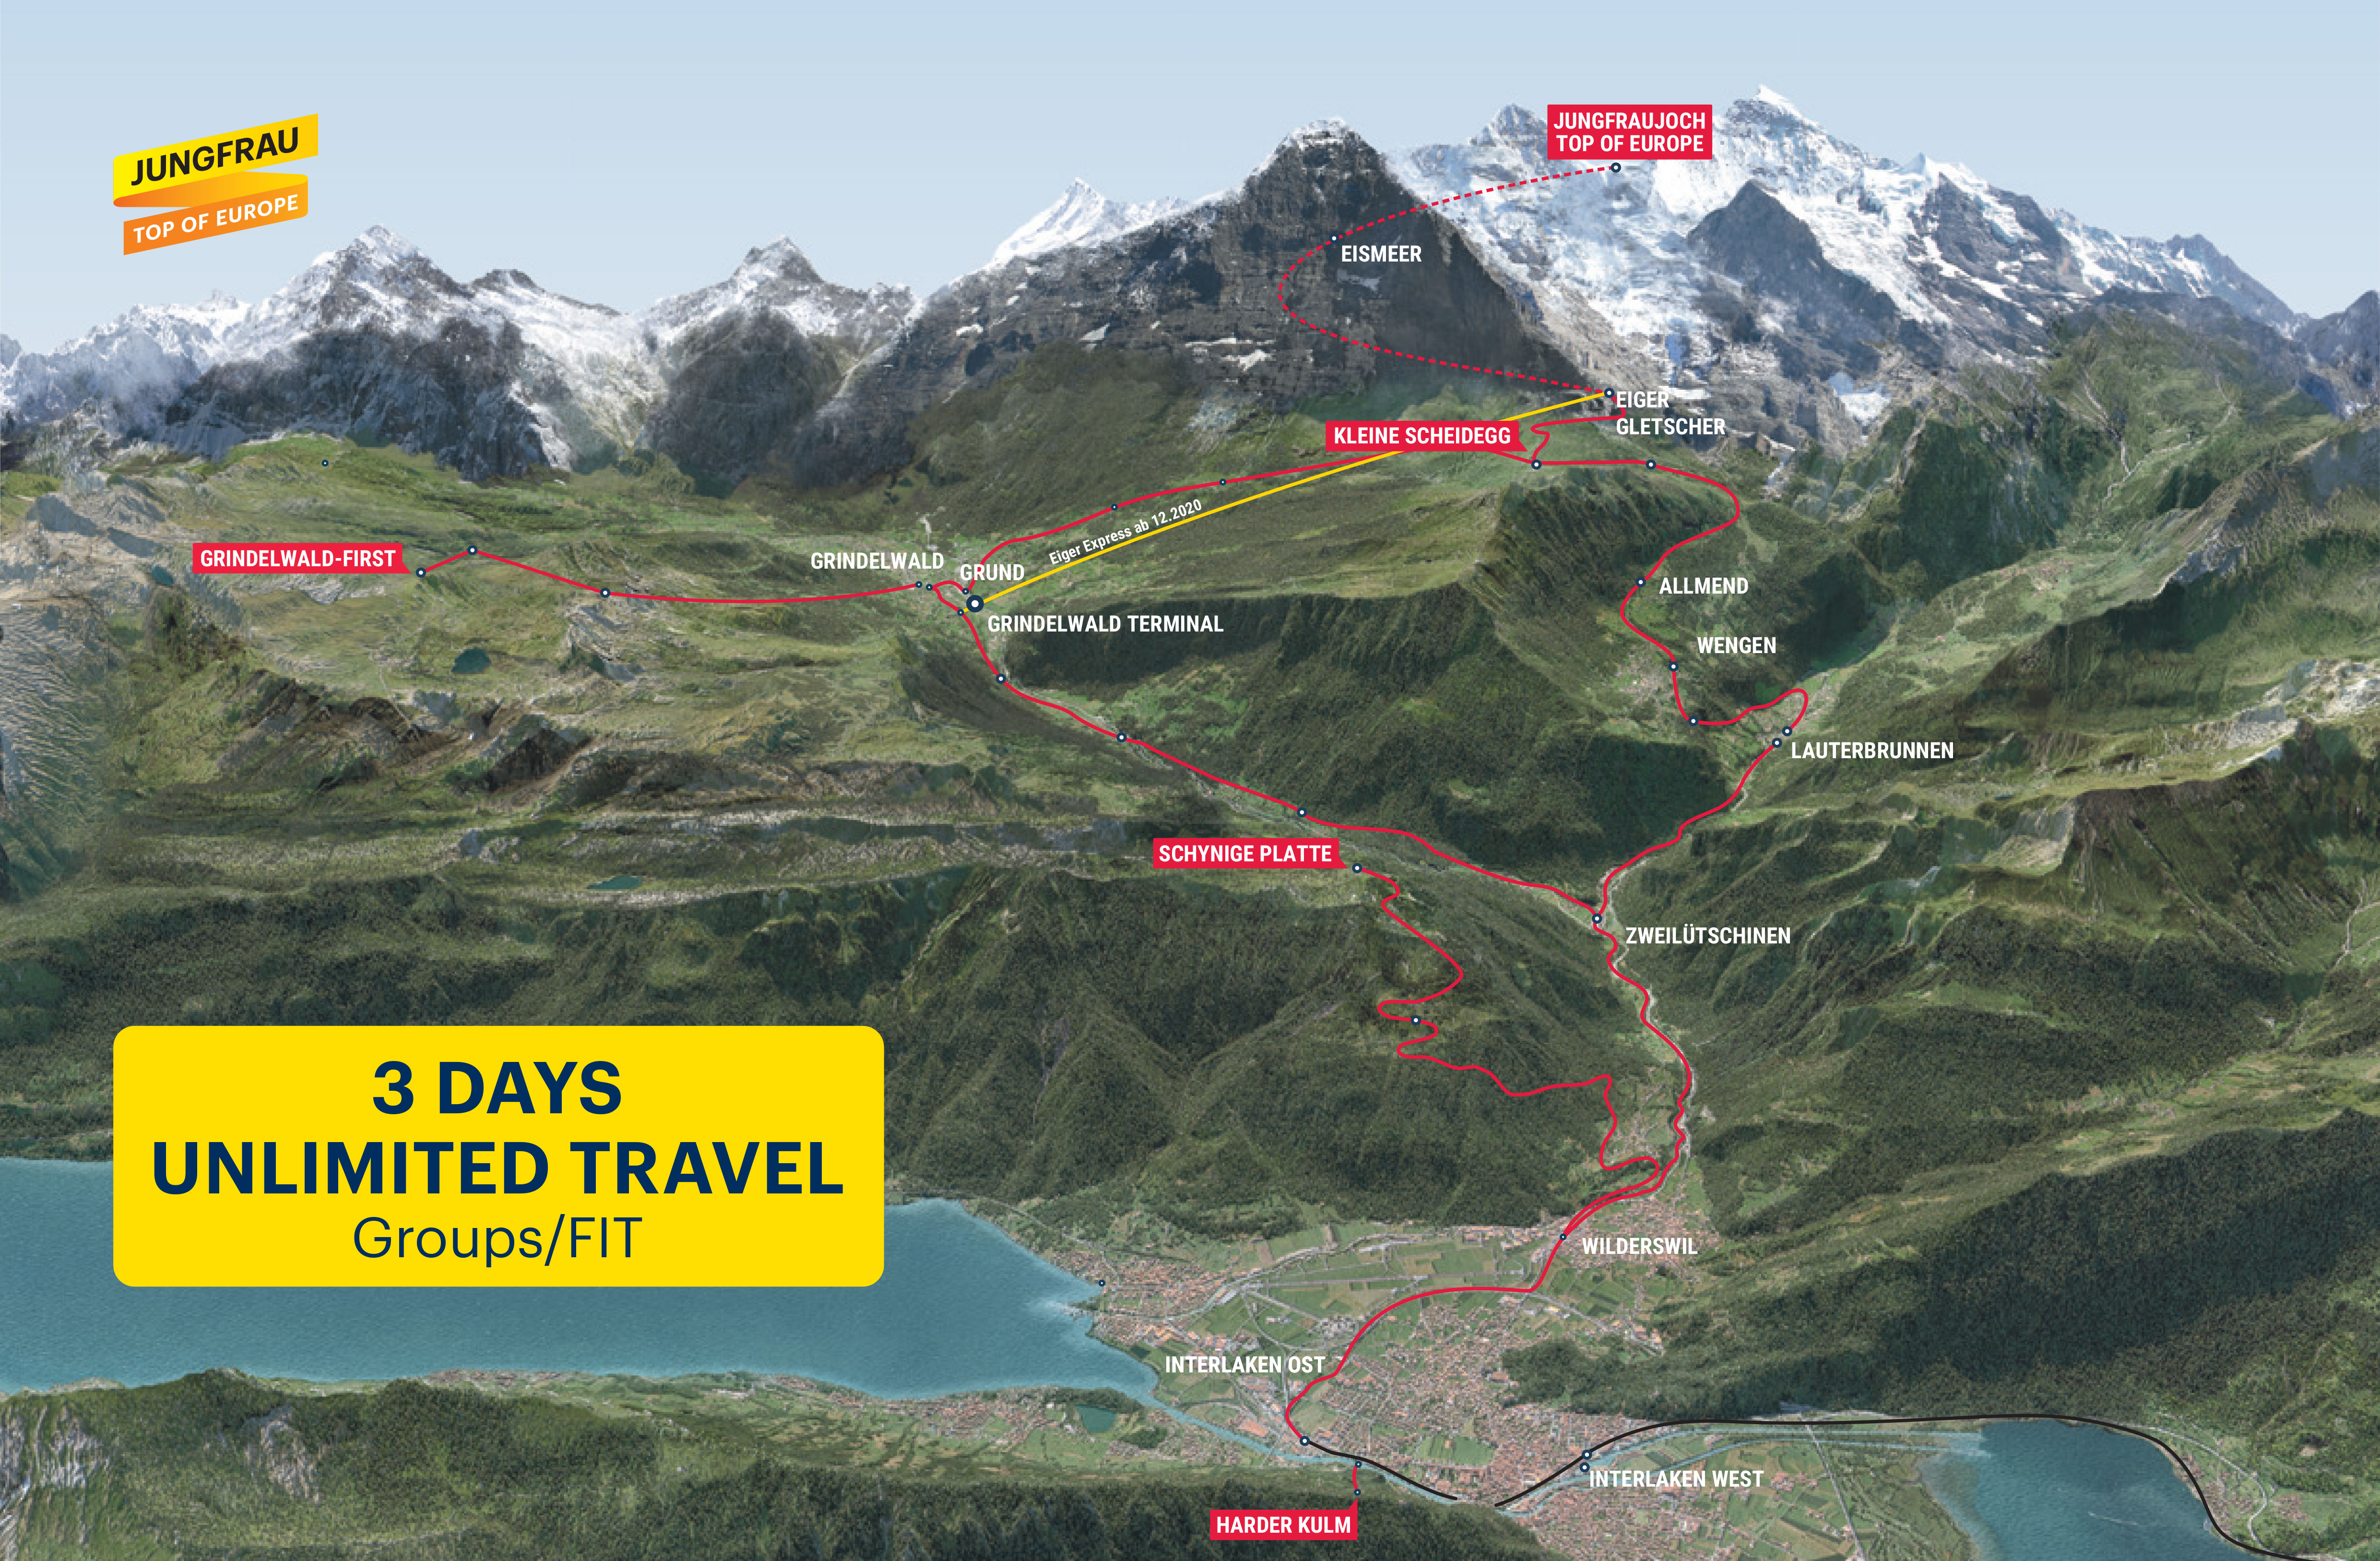 H I S ユングフラウエリアの鉄道乗り放題 ユングフラウvipパス3日間グリンデルワルド スイス のオプショナルツアー 海外現地ツアー格安予約